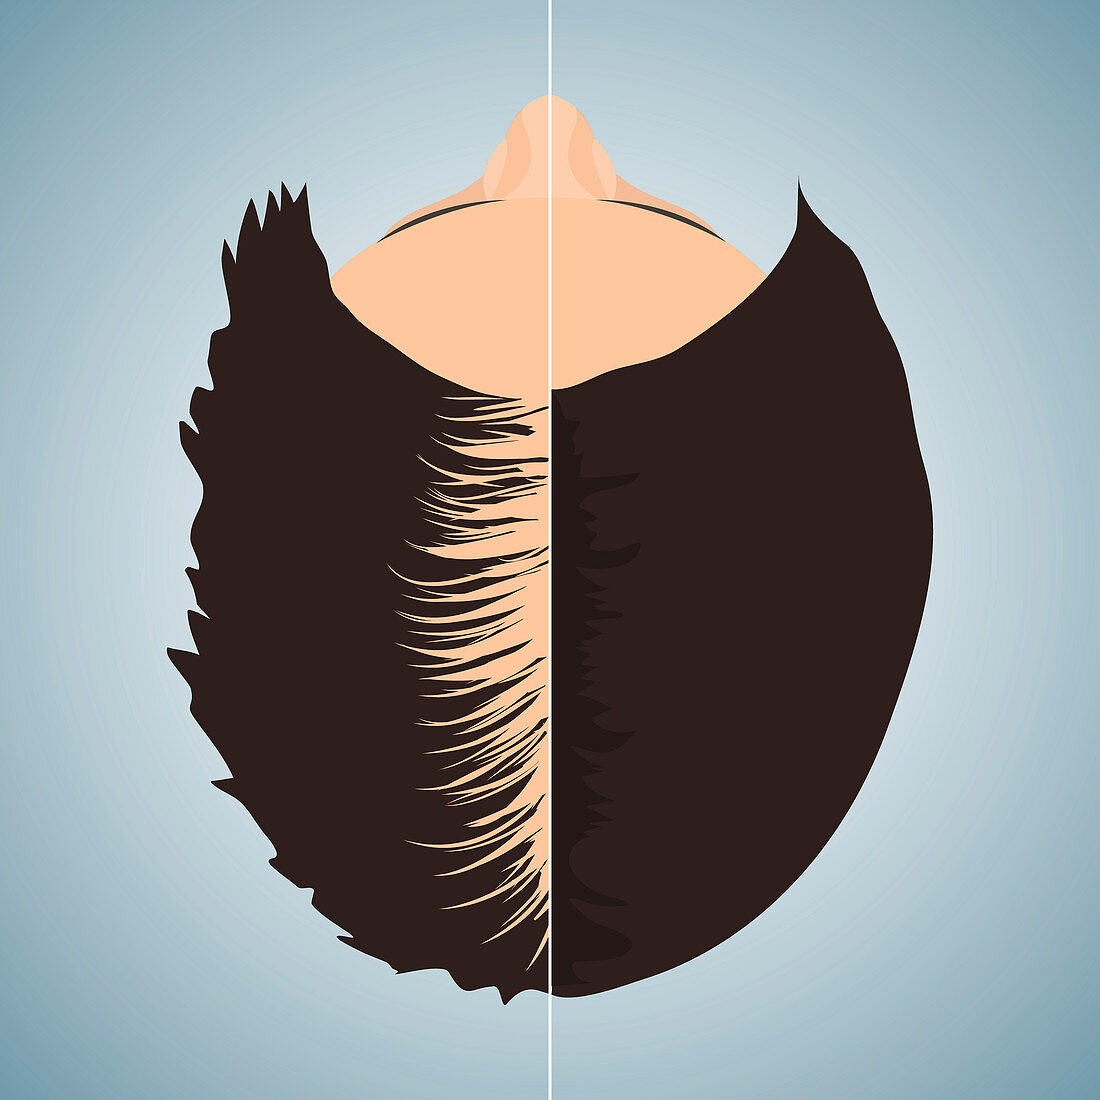 Hair loss treatment for women, conceptual illustration